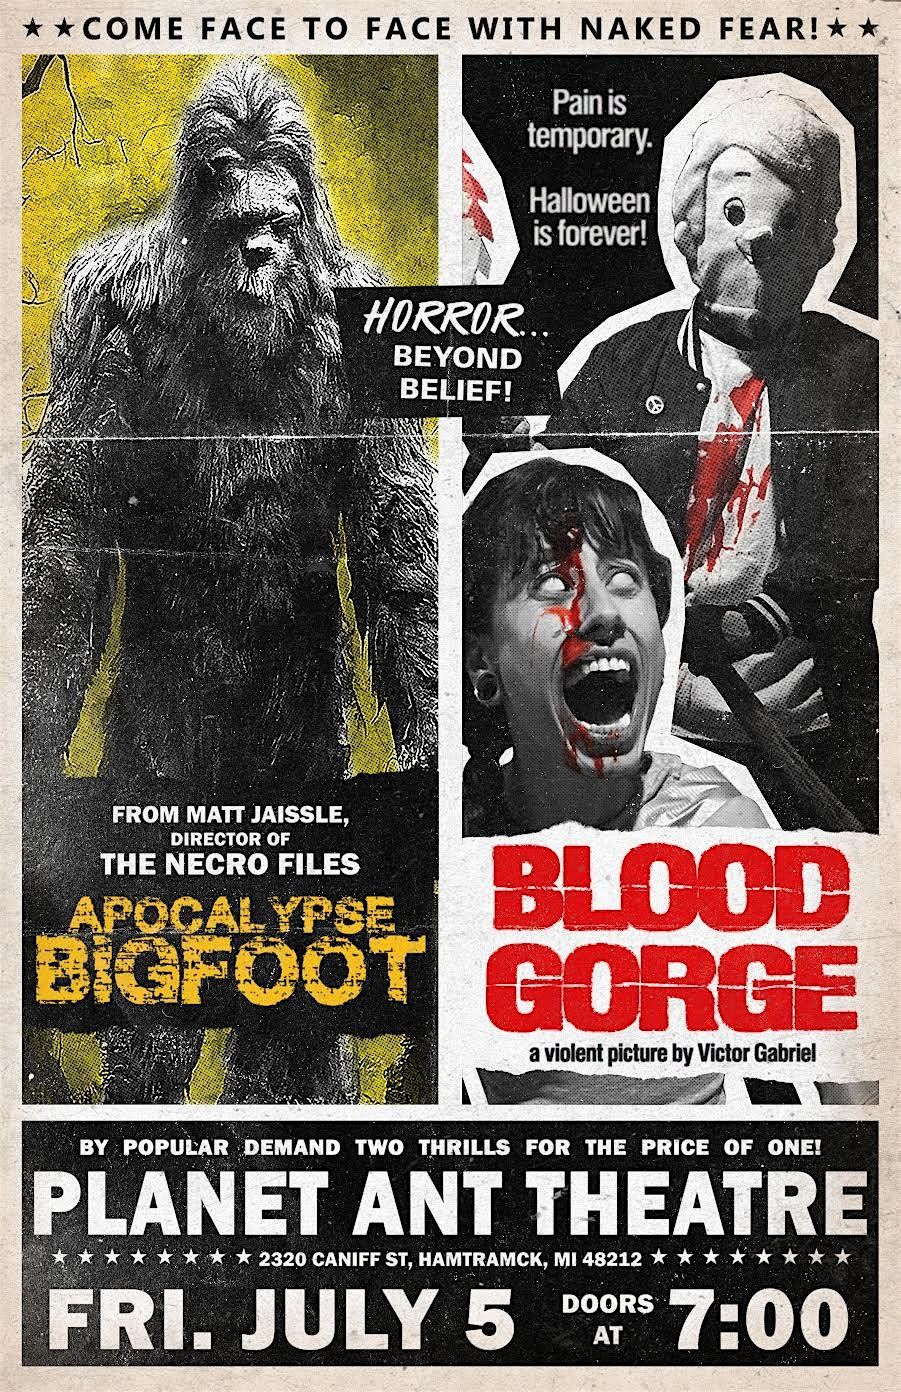 FILM | Blood Gorge & Apocalypse Bigfoot